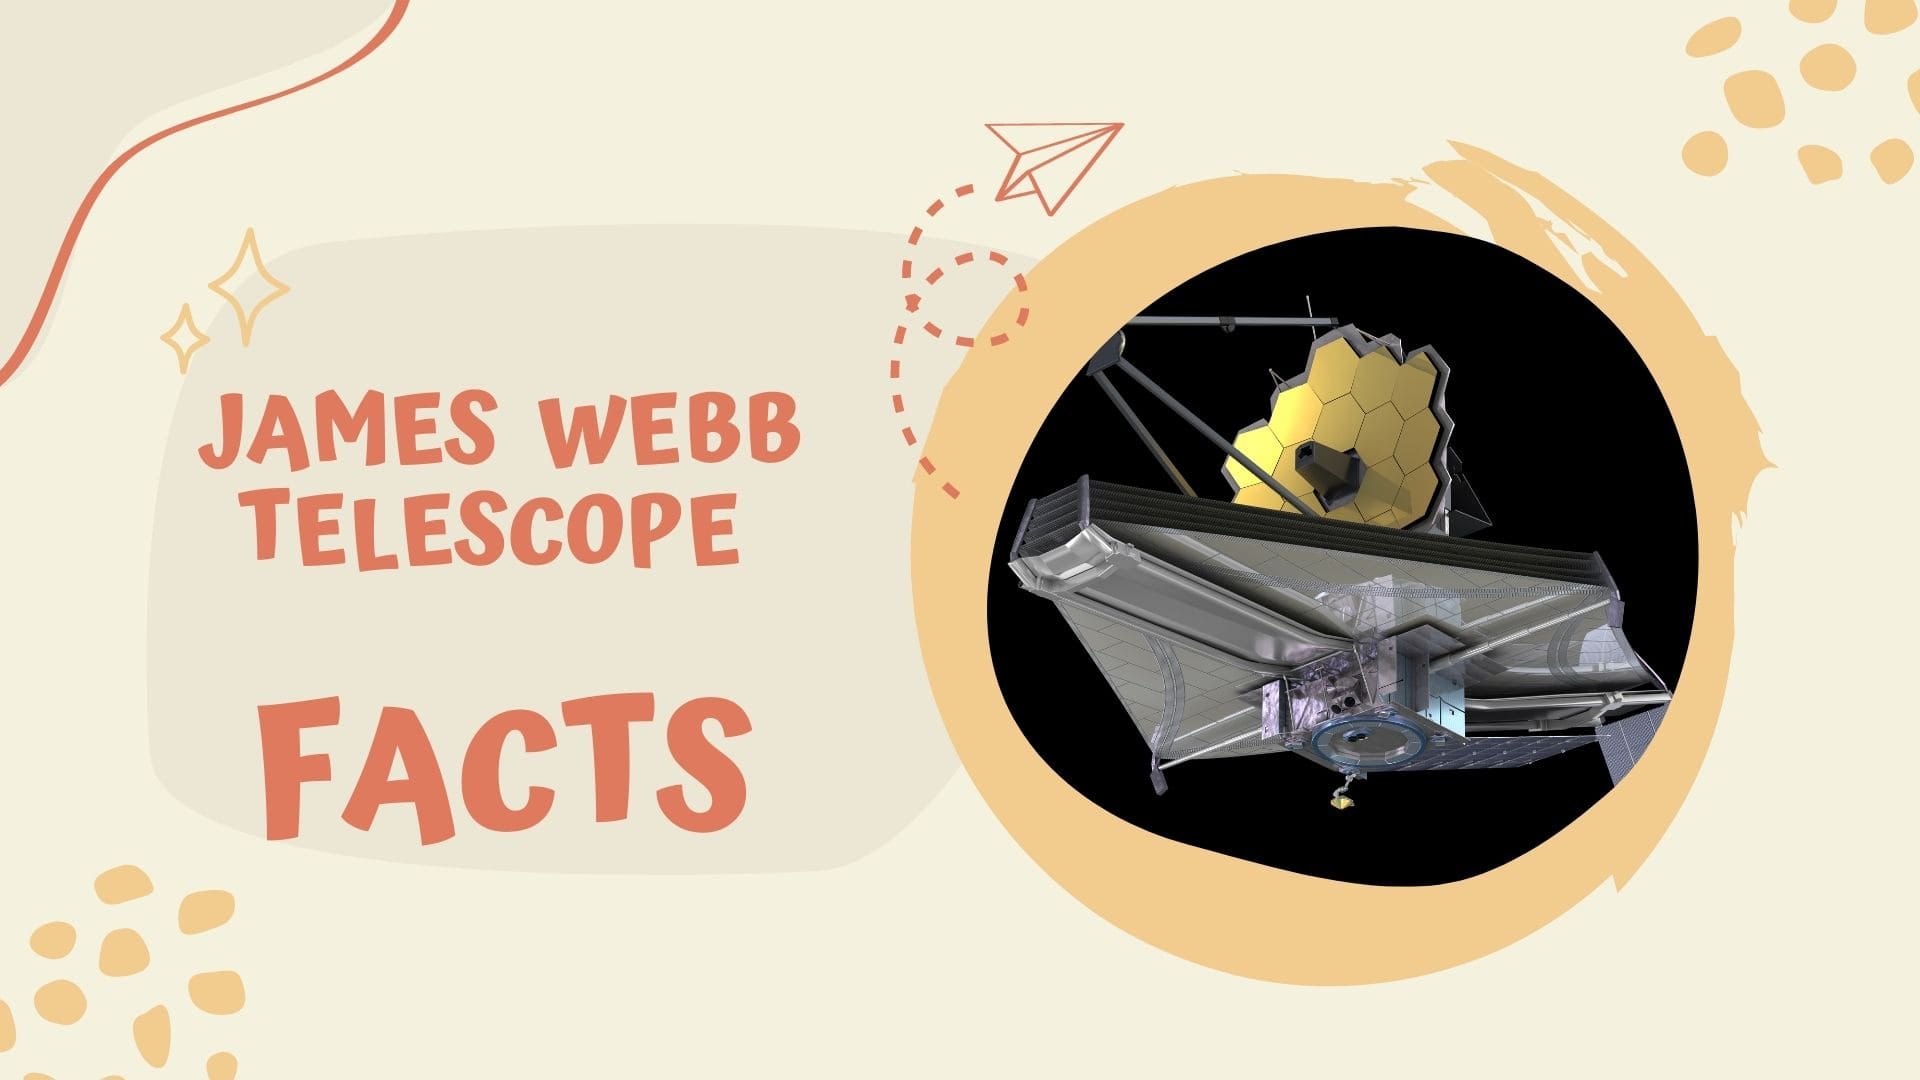 James Webb Telescope Facts